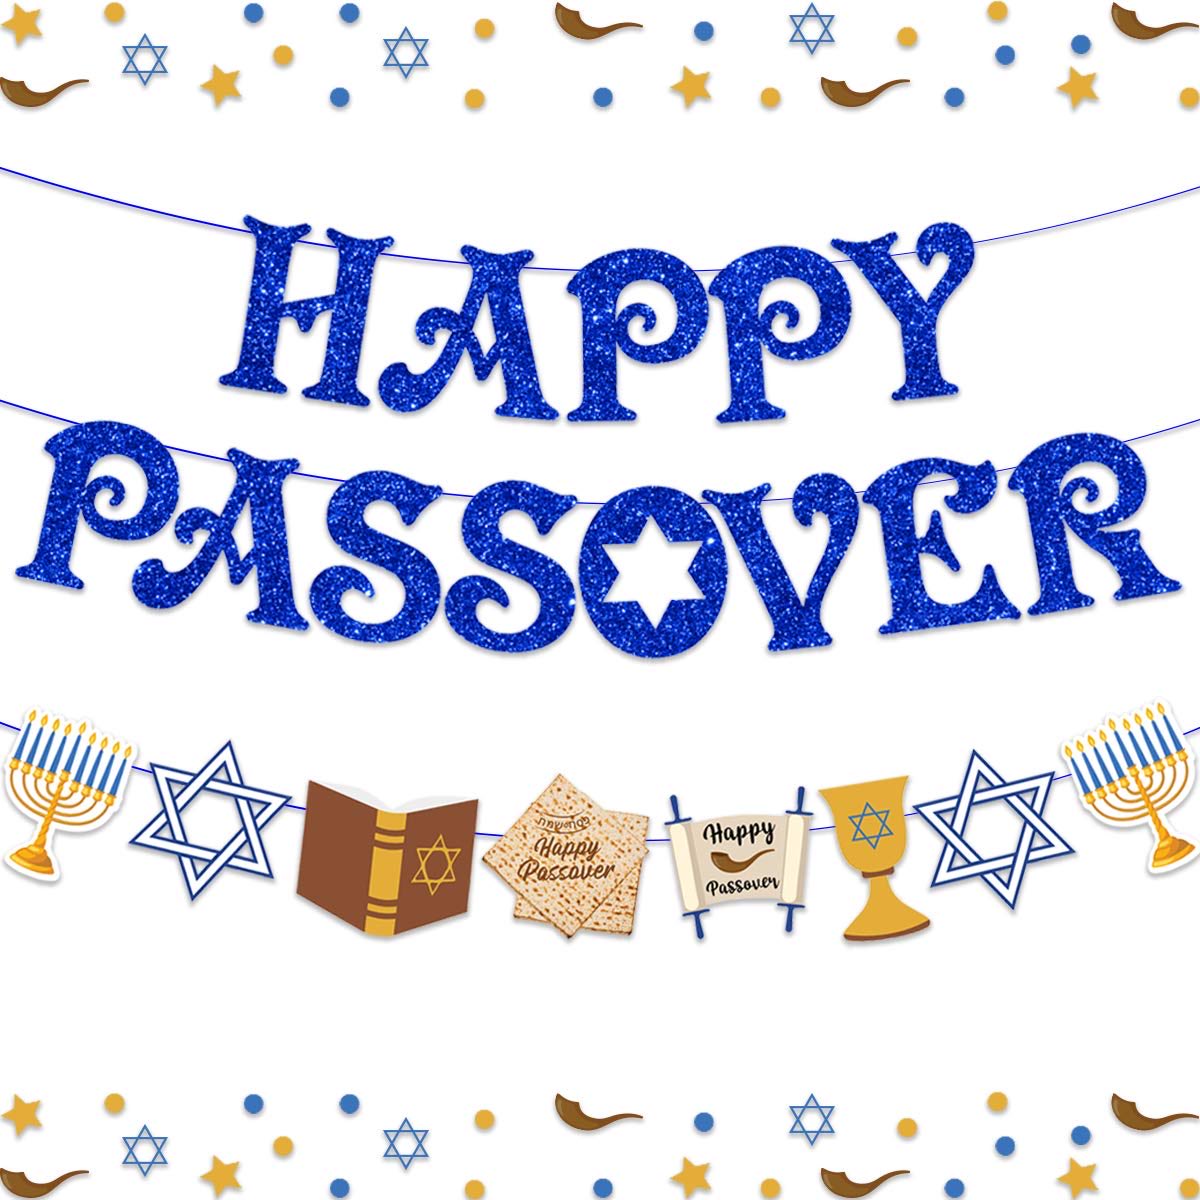 Chag Pesach Sameach / Happy Passover to all who celebrate